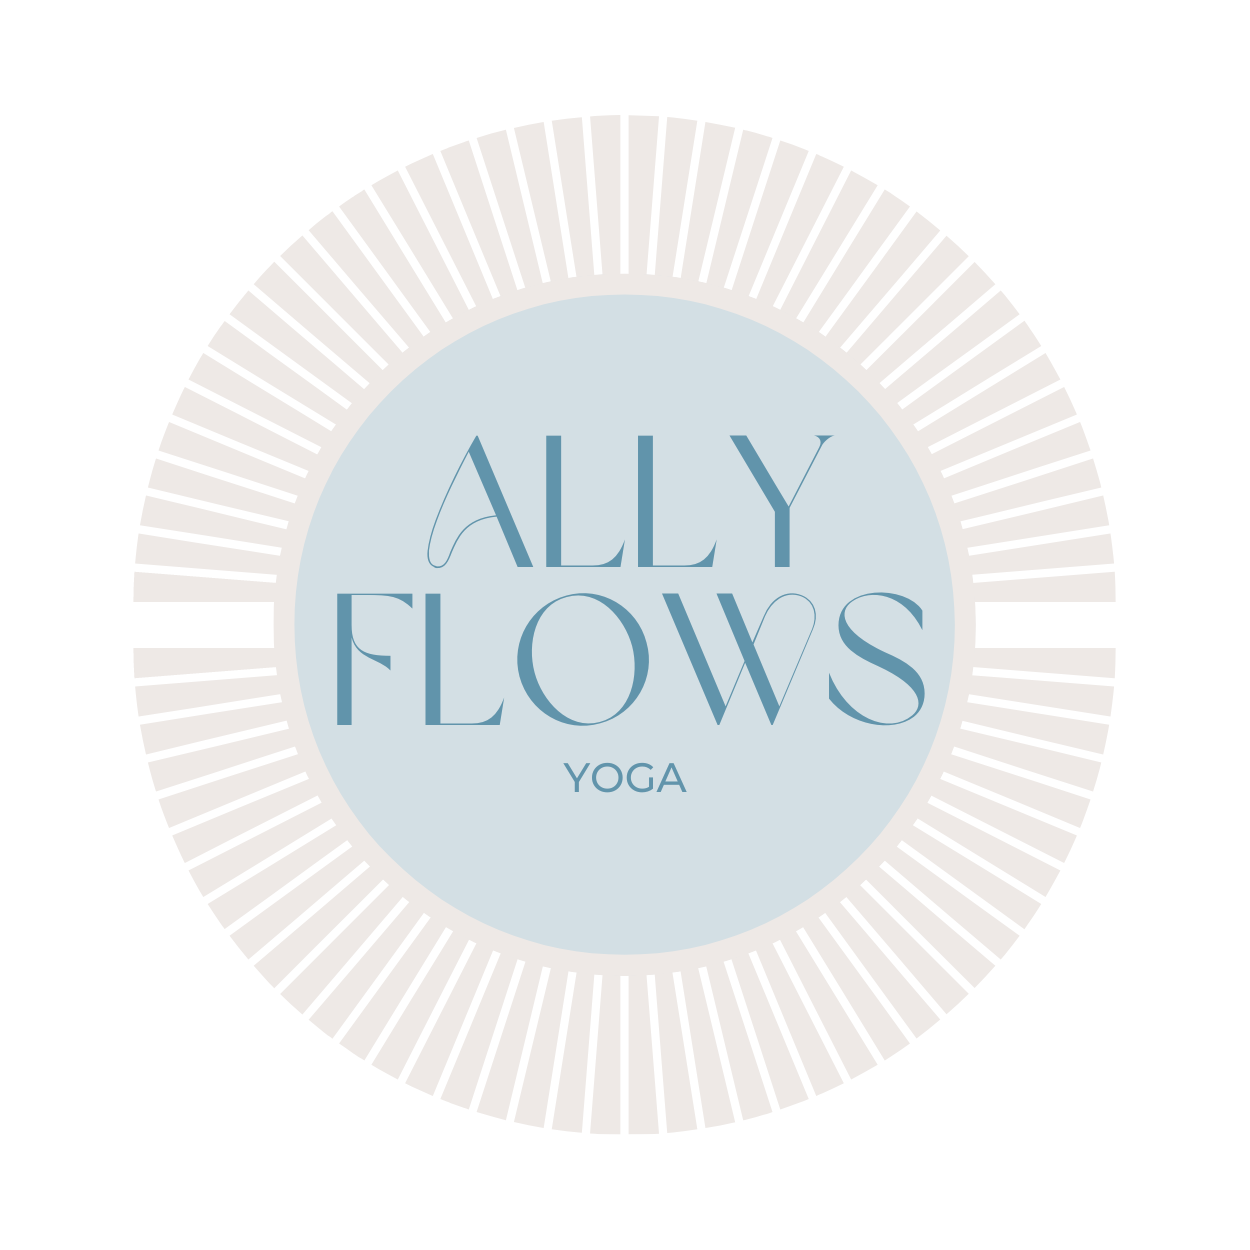 Ally Flows